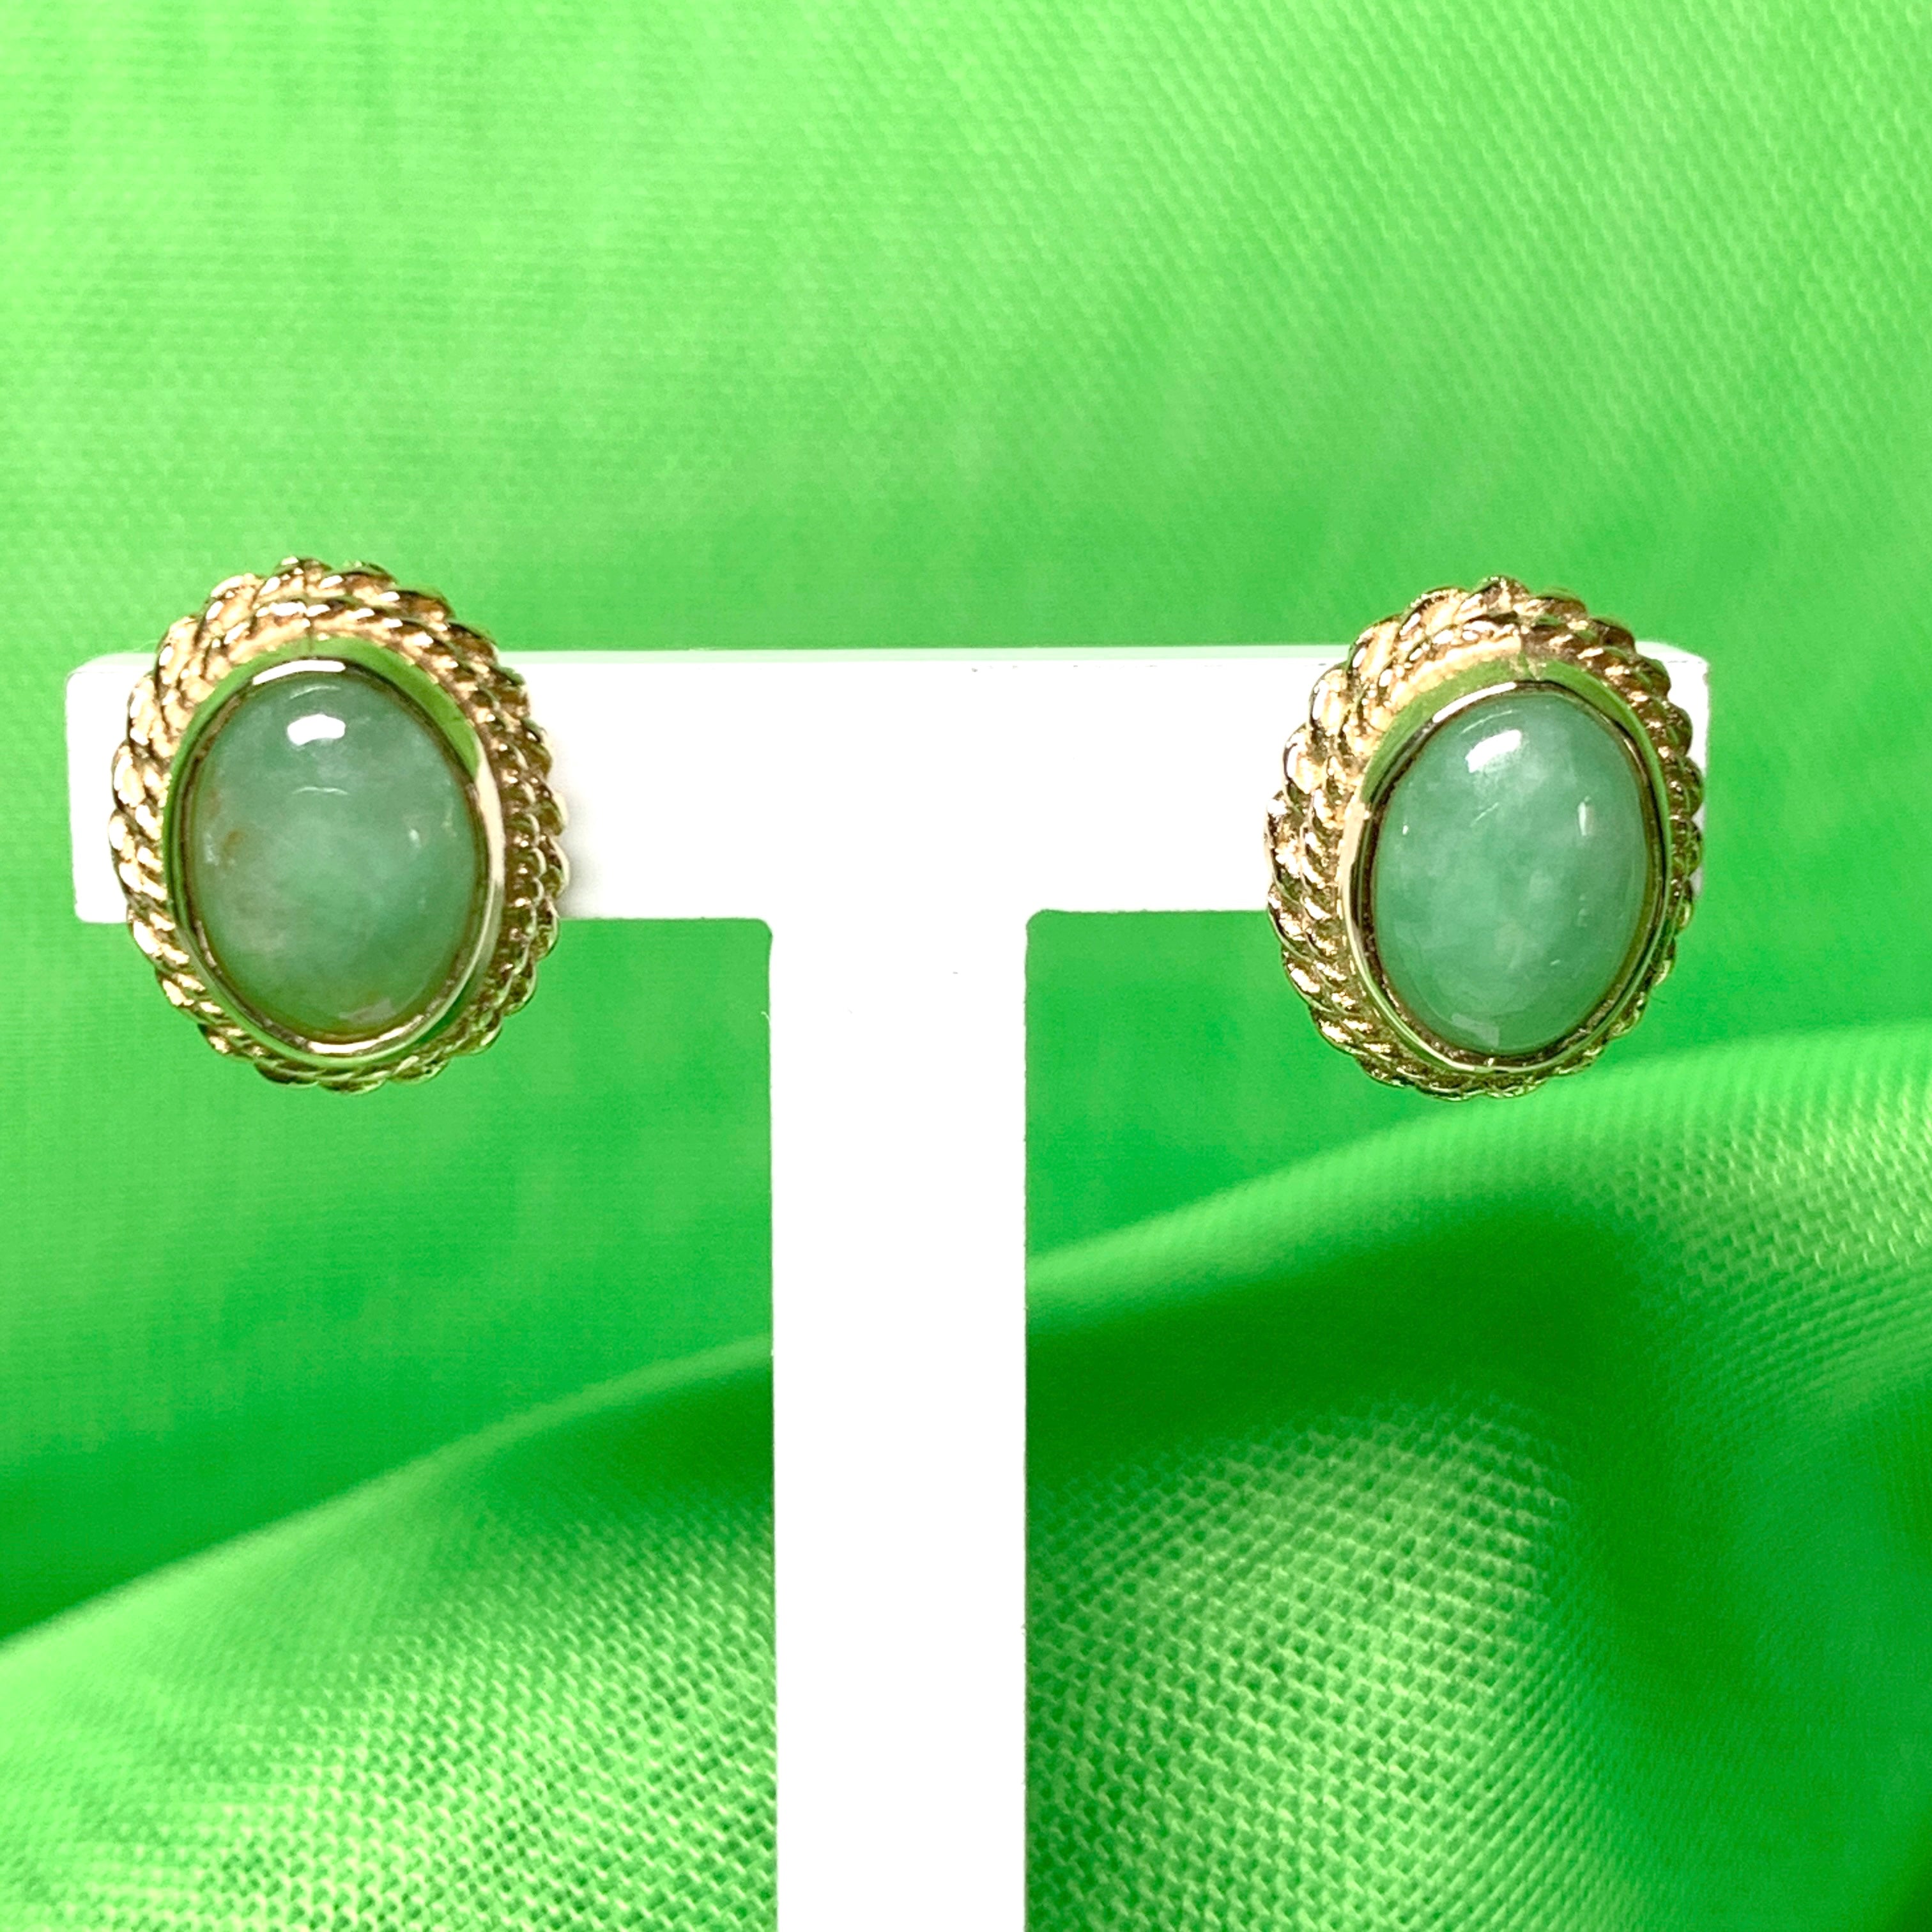 Golden Quartz With Green Jade Earring